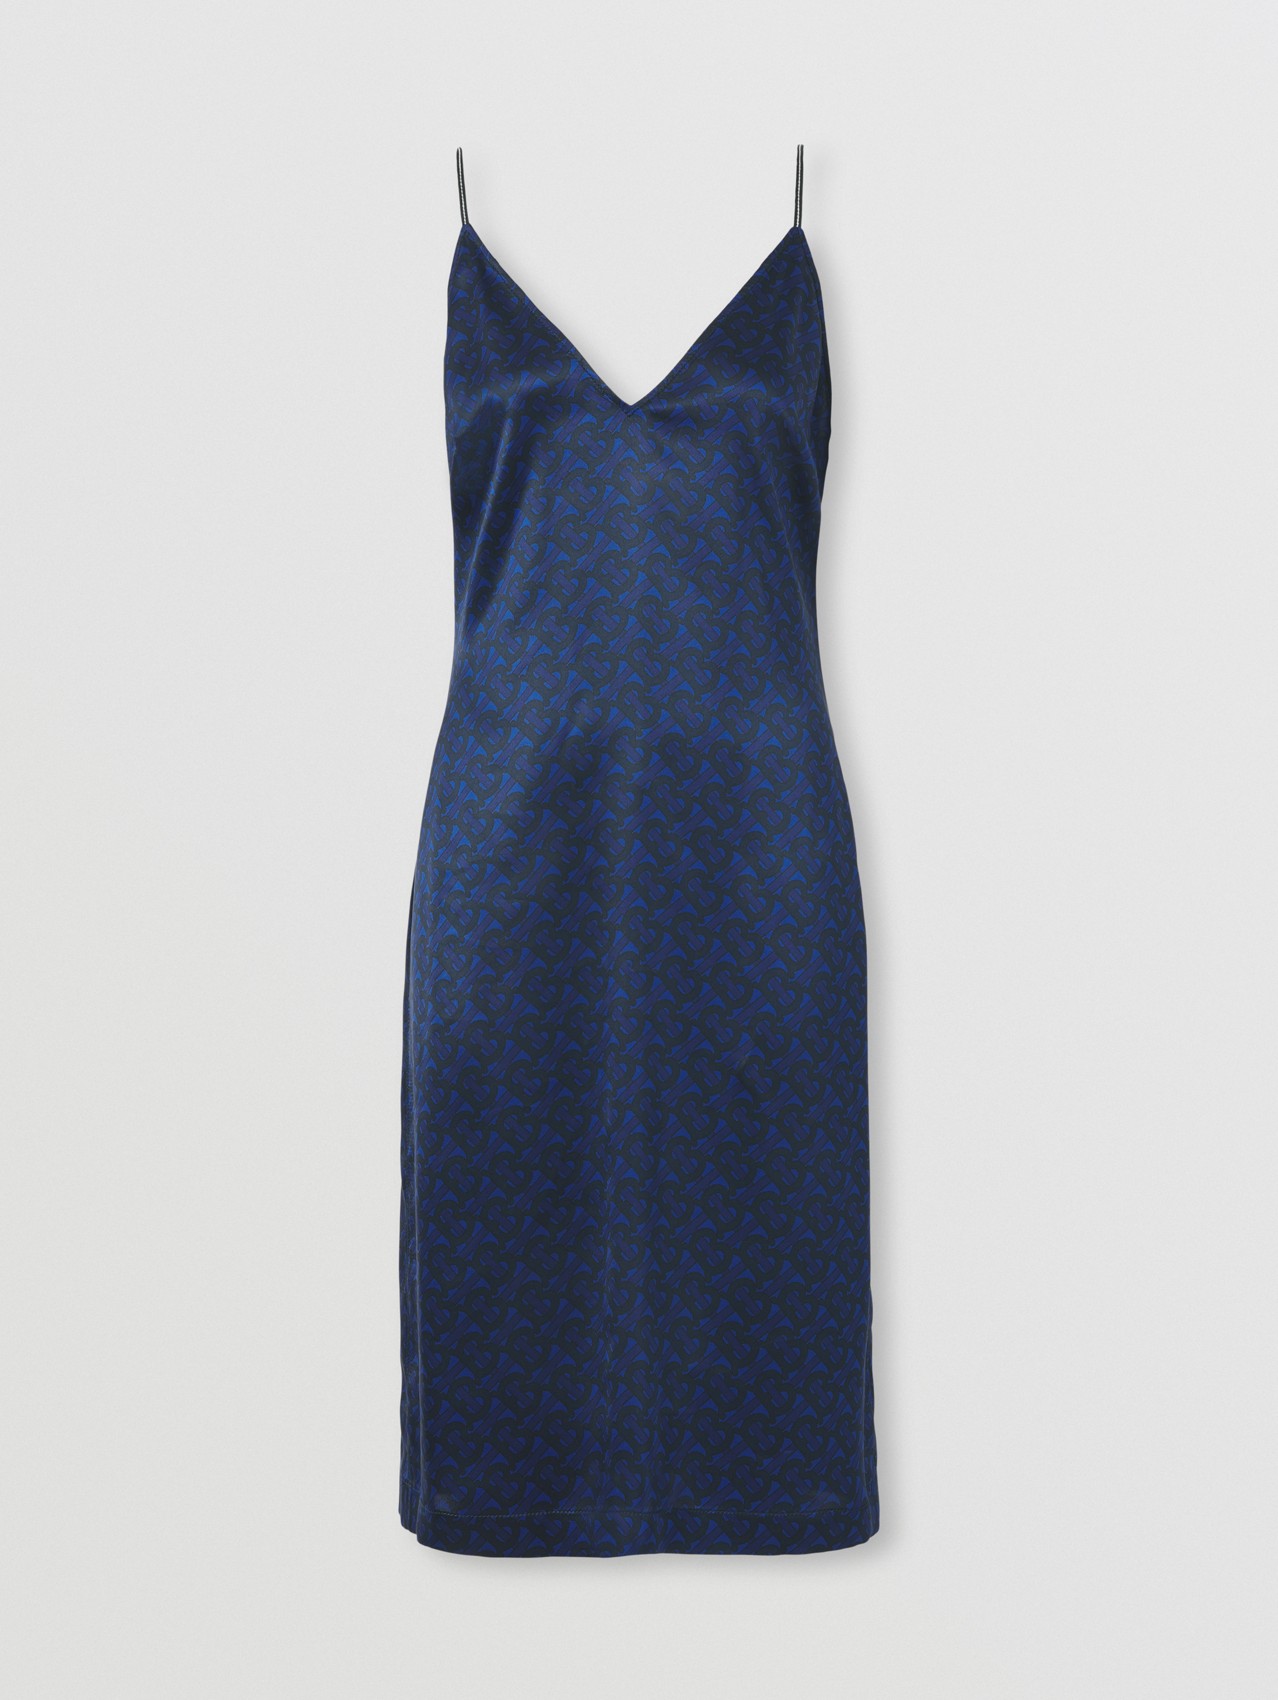 Monogram Print Silk Satin Slip Dress in Deep Royal Blue